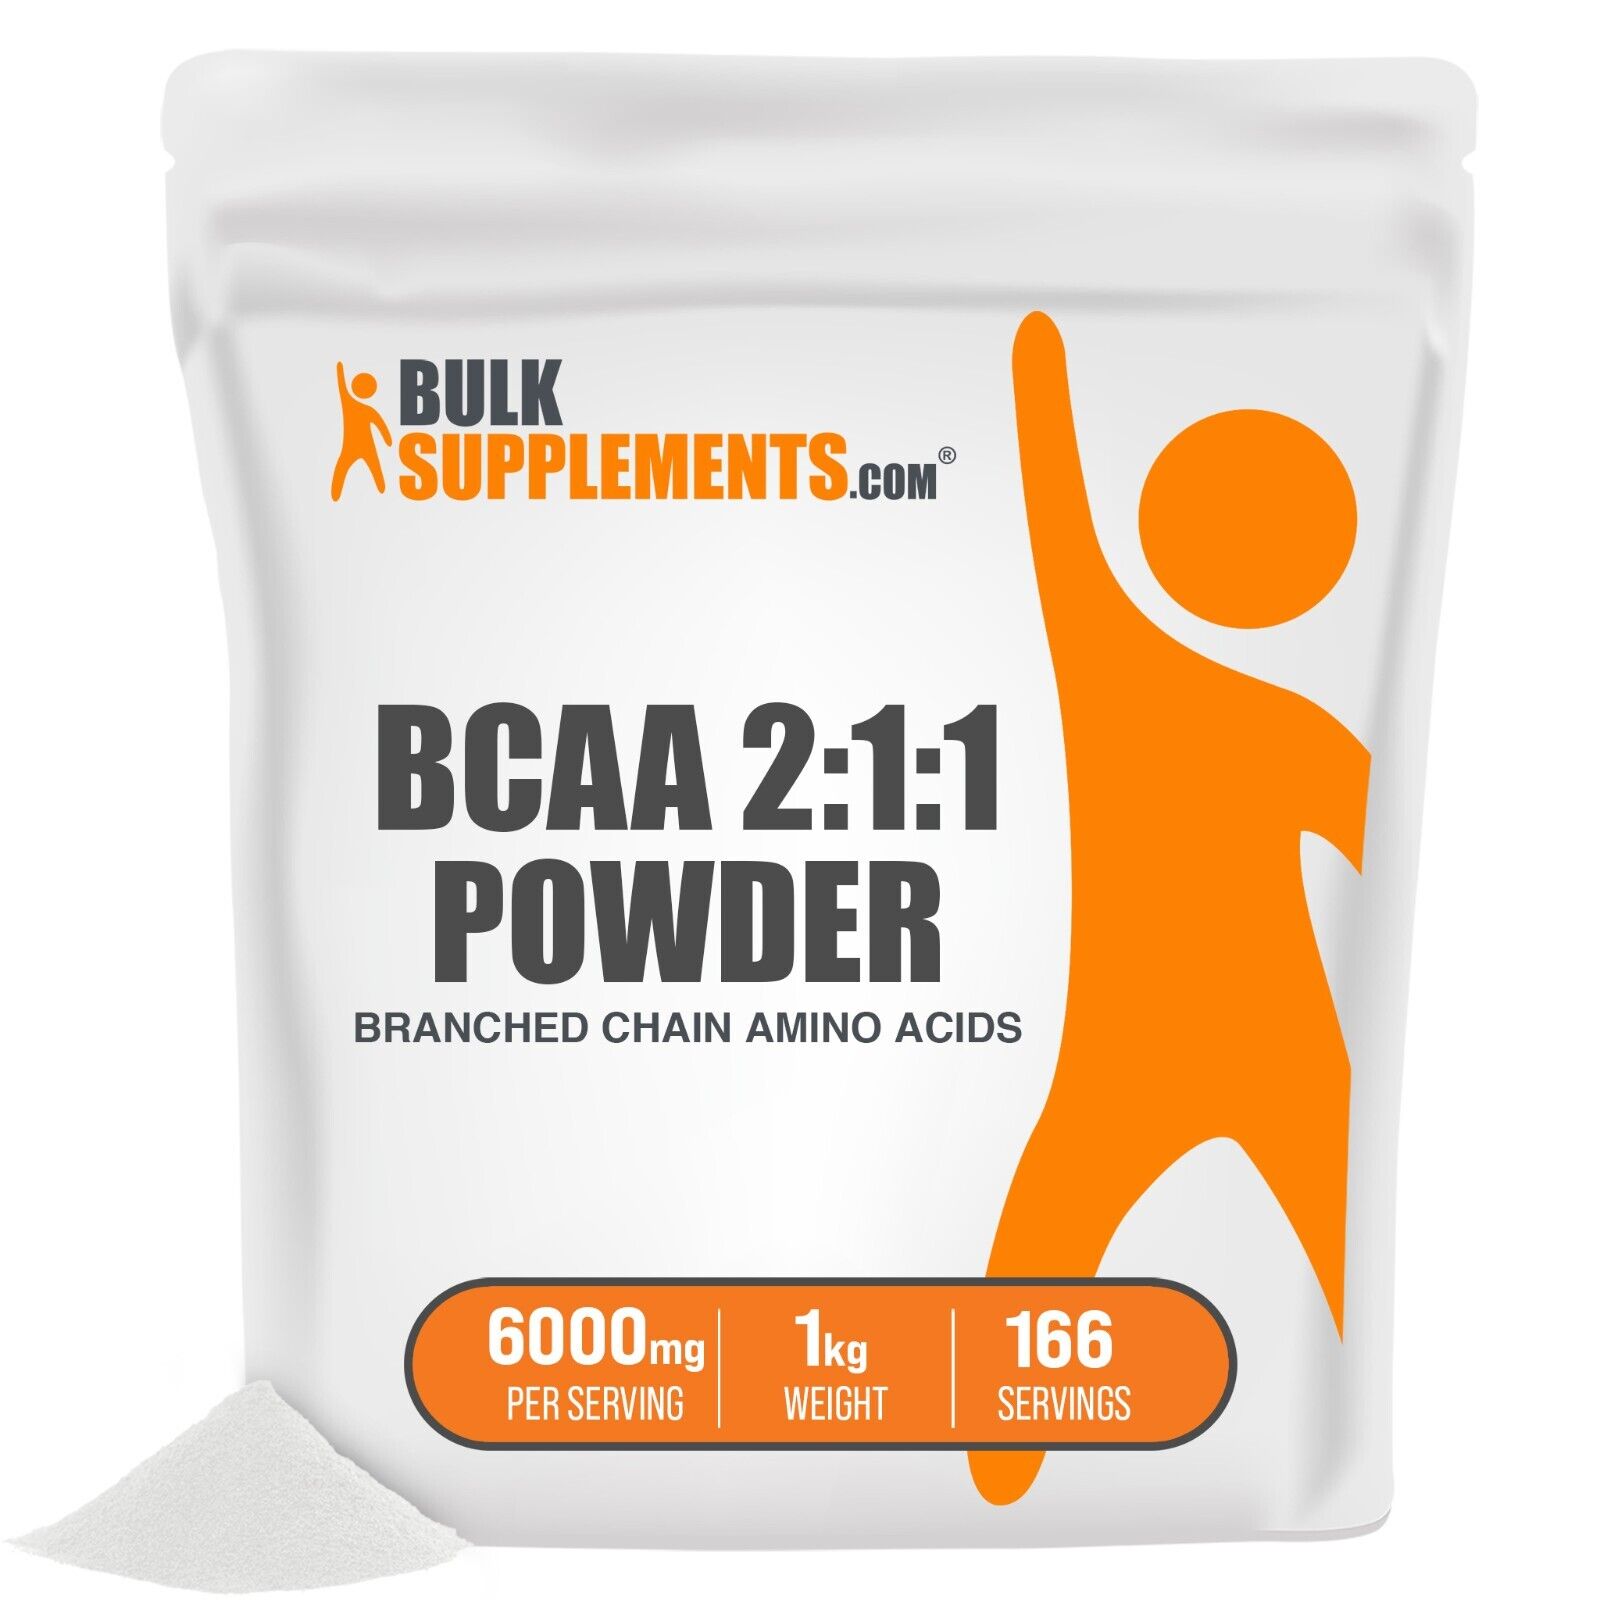 BULKSUPPLEMENTS.COM BCAA 2:1:1 Powder - Branched Chain Amino Acids - BCAA Powder - BCAAs Amino Acids - BCAA Pre Workout - Amino Acid Powder - 6000mg per Serving, 167 Servings (1 Kilogram - 2.2 lbs)